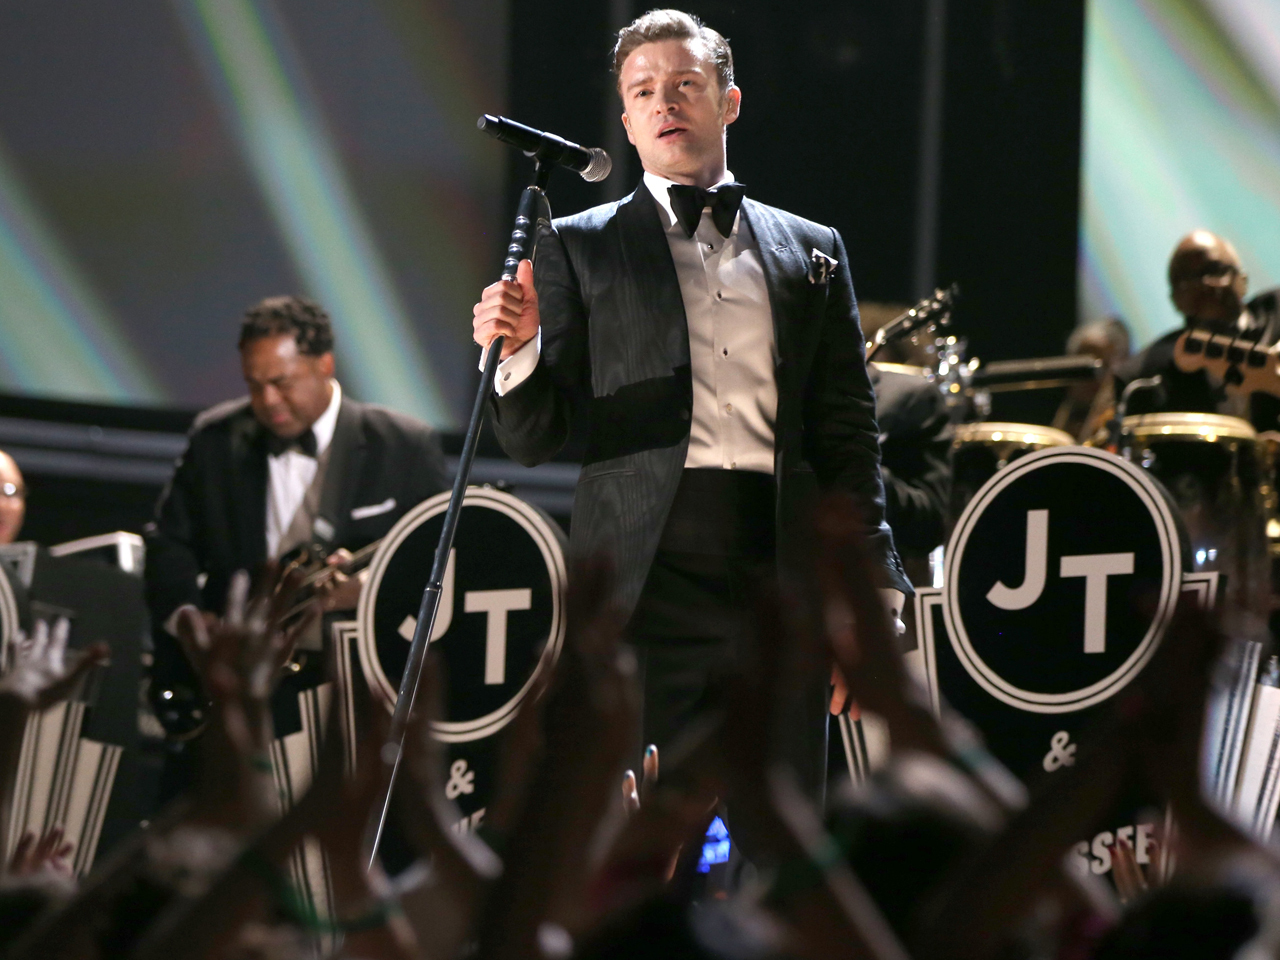 Justin Timberlake set to return to 2013 BRIT Awards for a UK